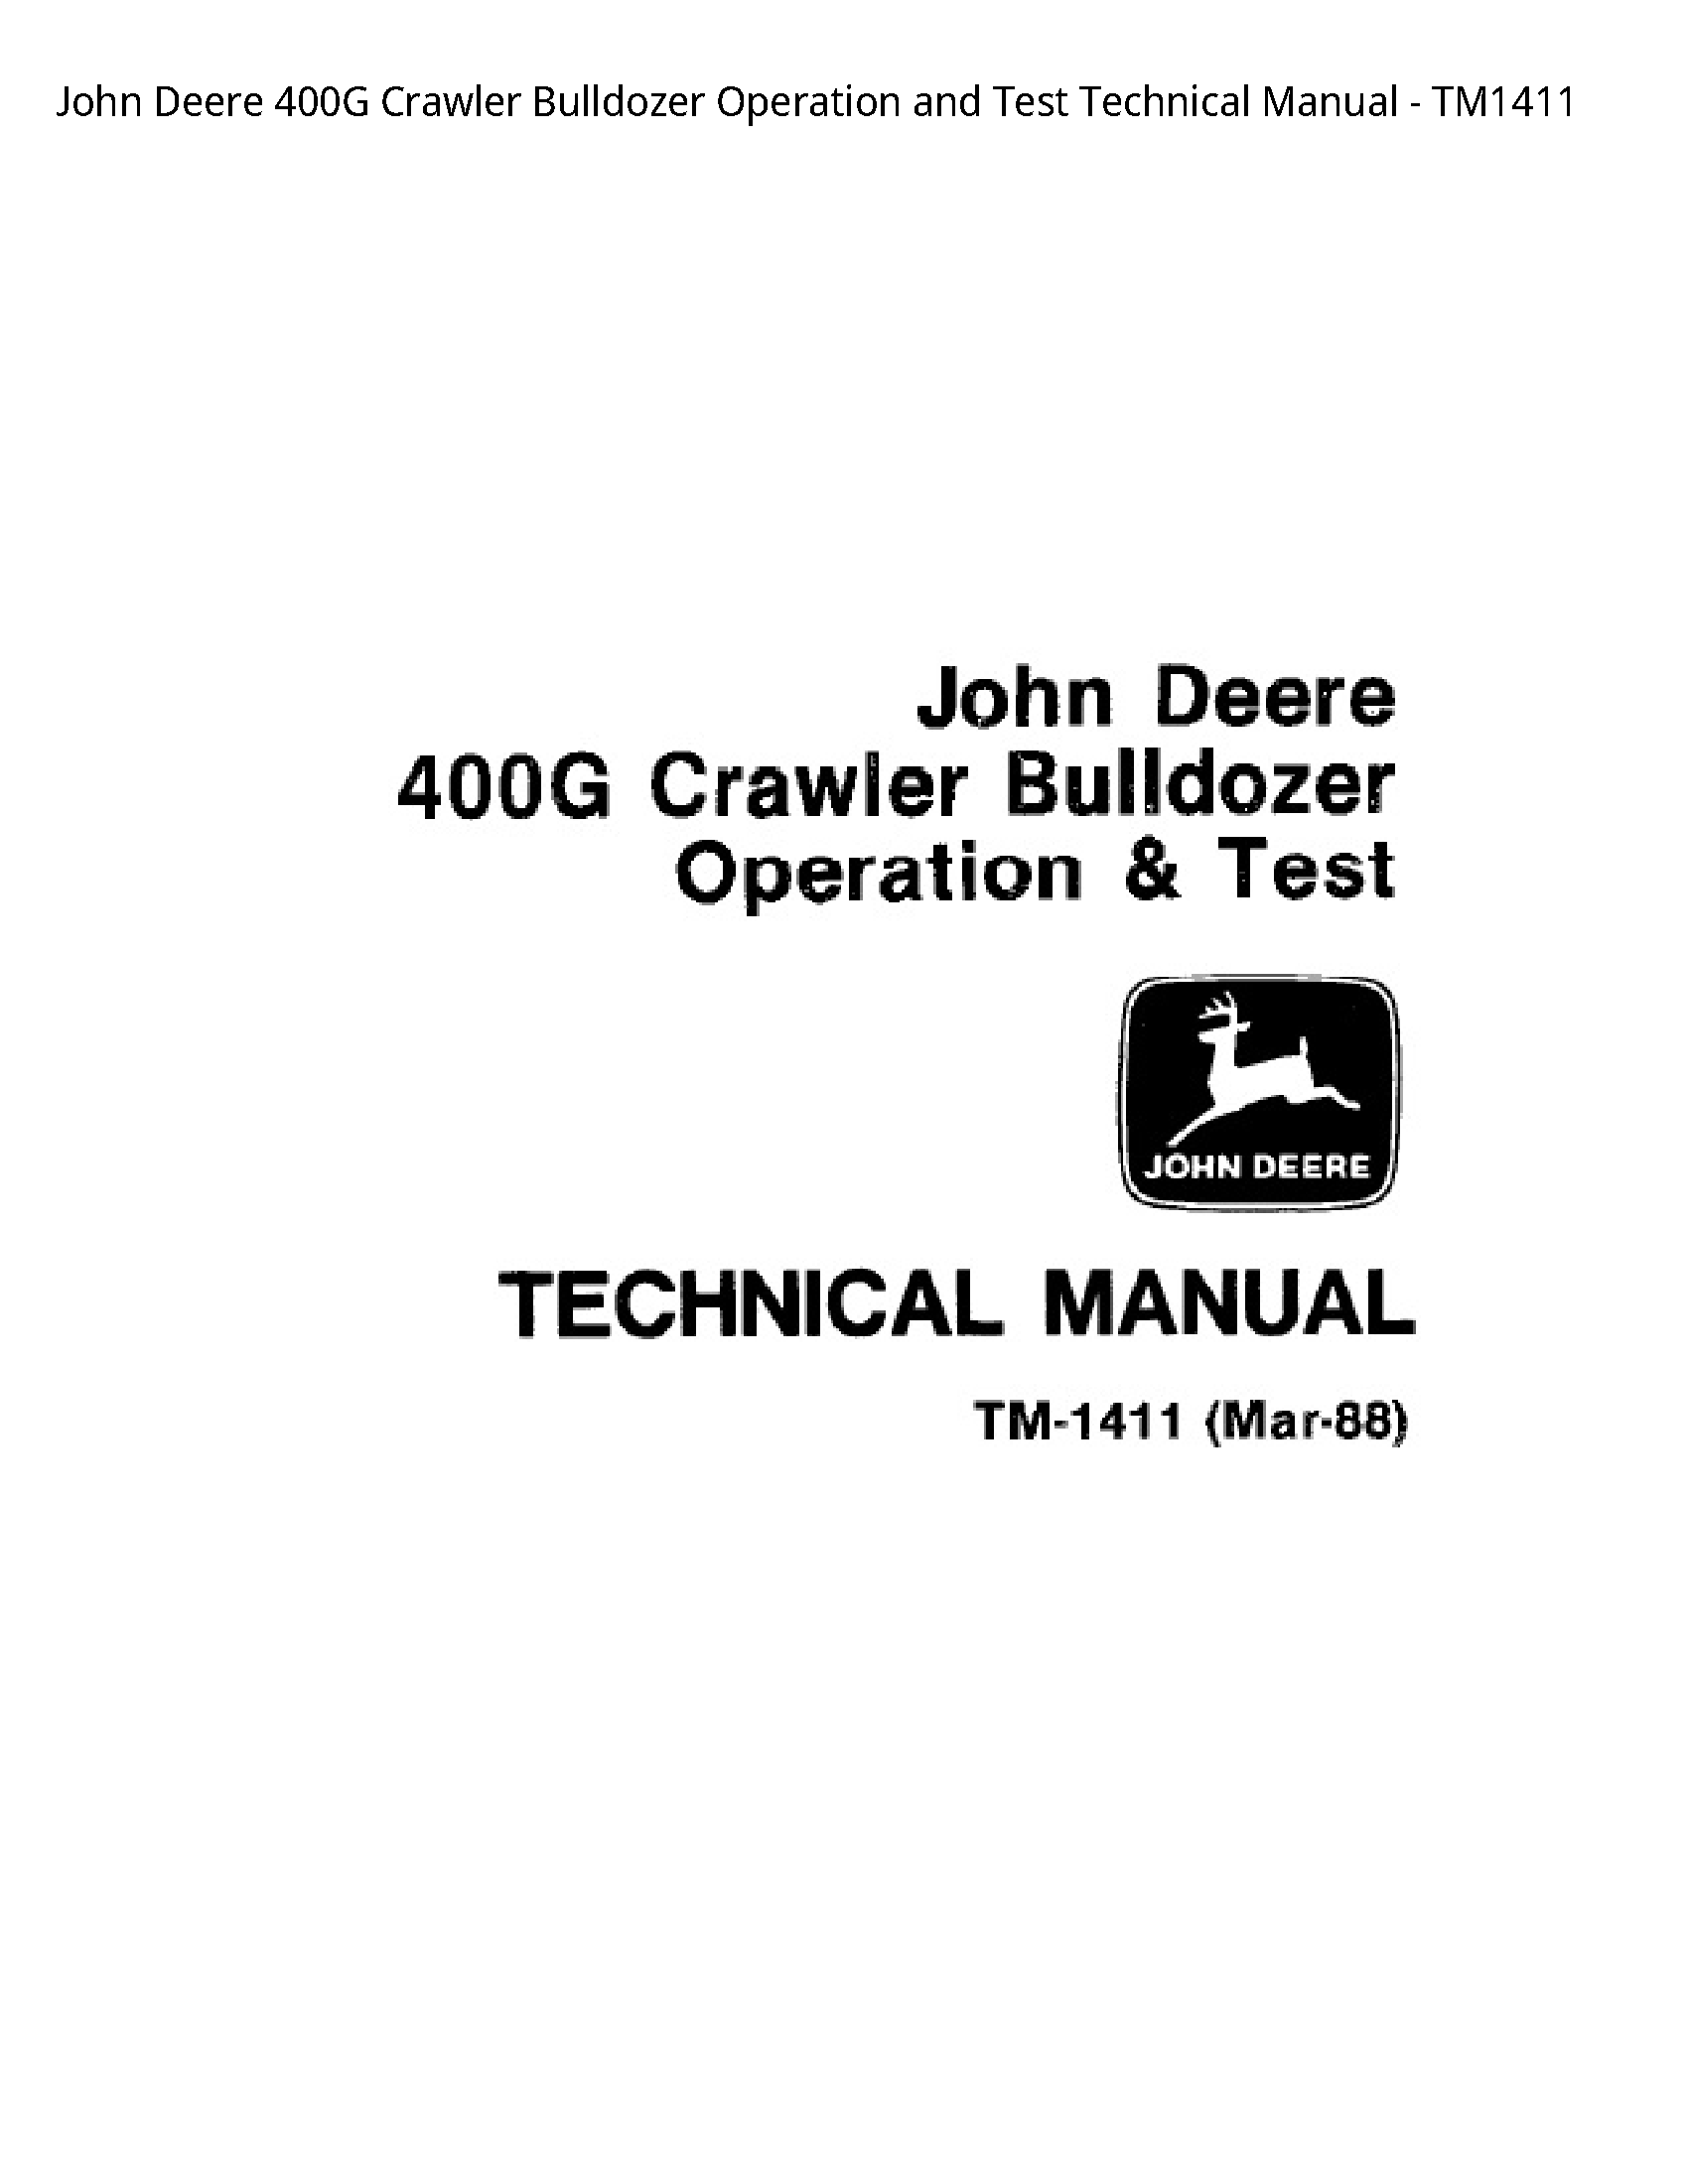 John Deere 400G Crawler Bulldozer Operation  Test Technical manual